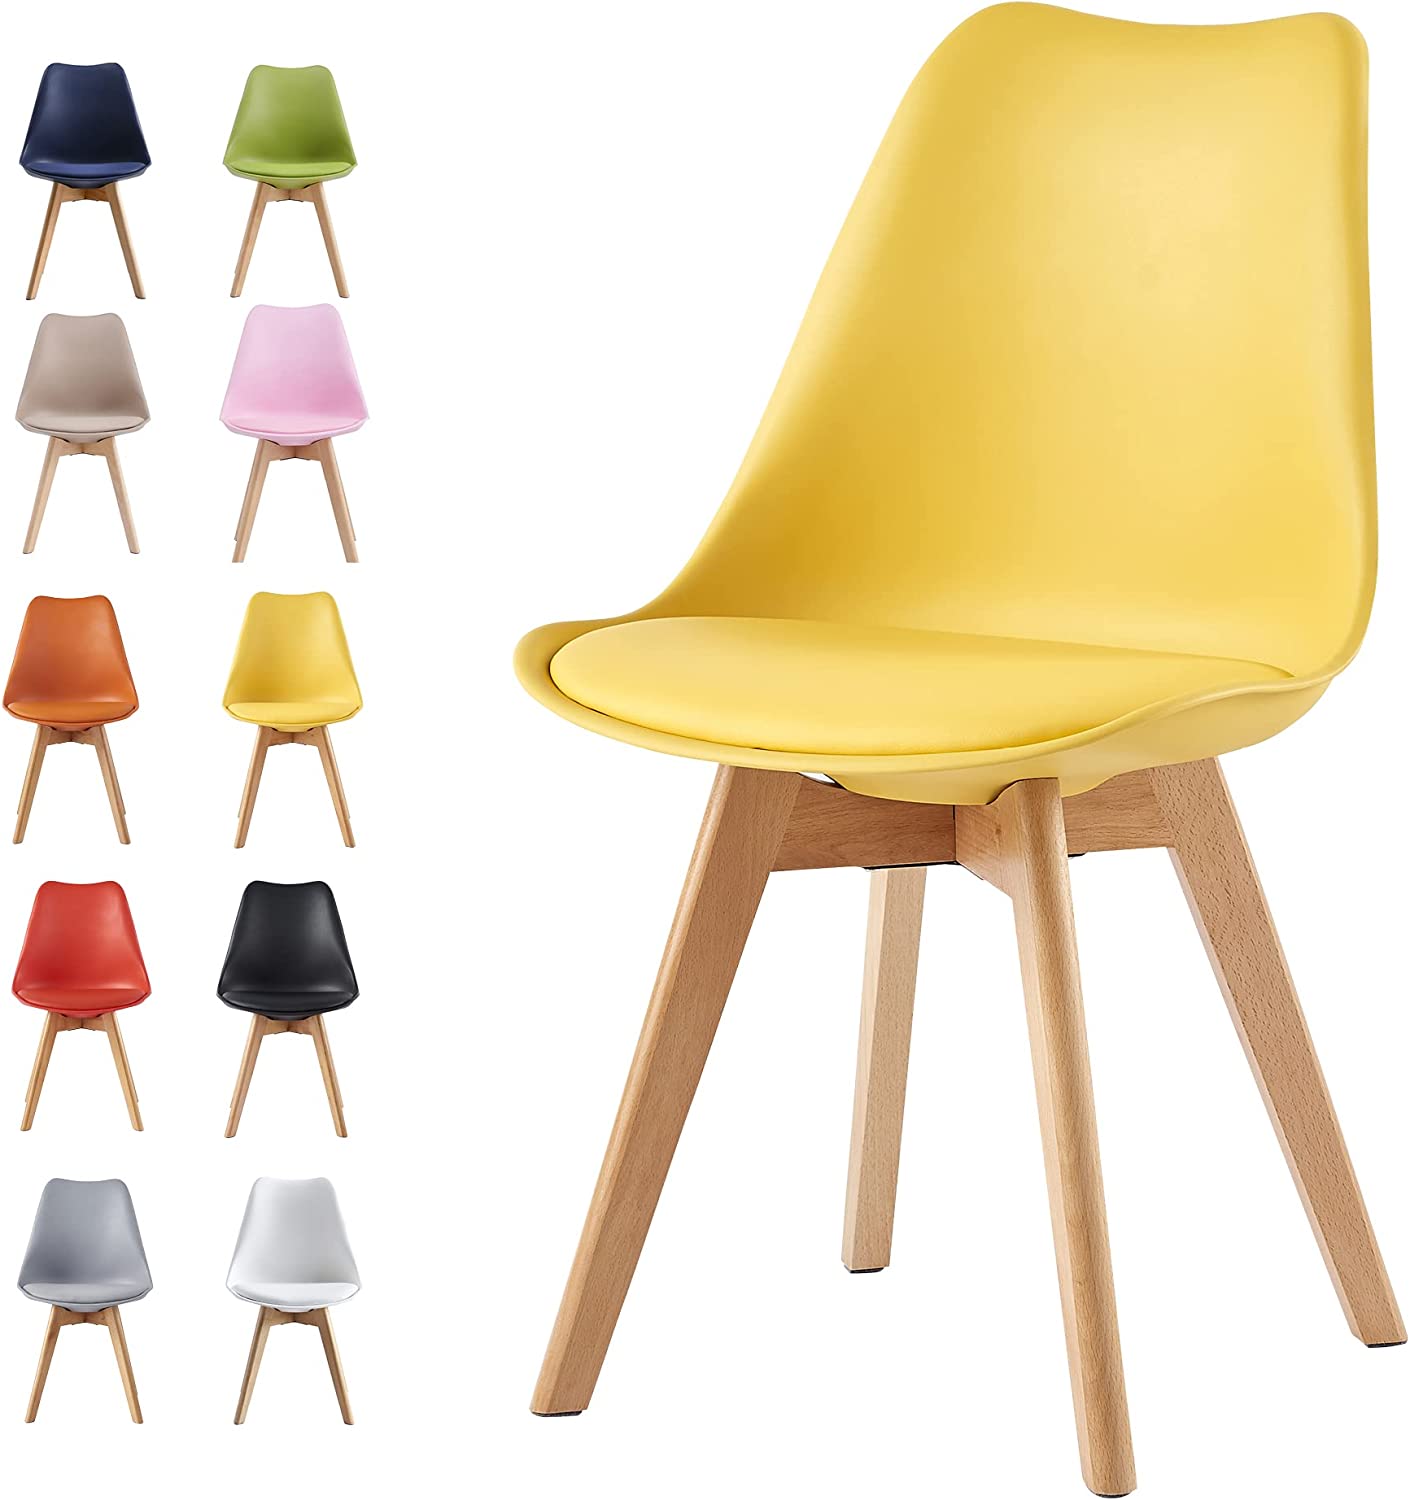 Distinct Designs Classic Mid-Century Design Dining Office Chair in durable Yellow PP Plastic-Natural Beach-Distinct Designs (London) Ltd